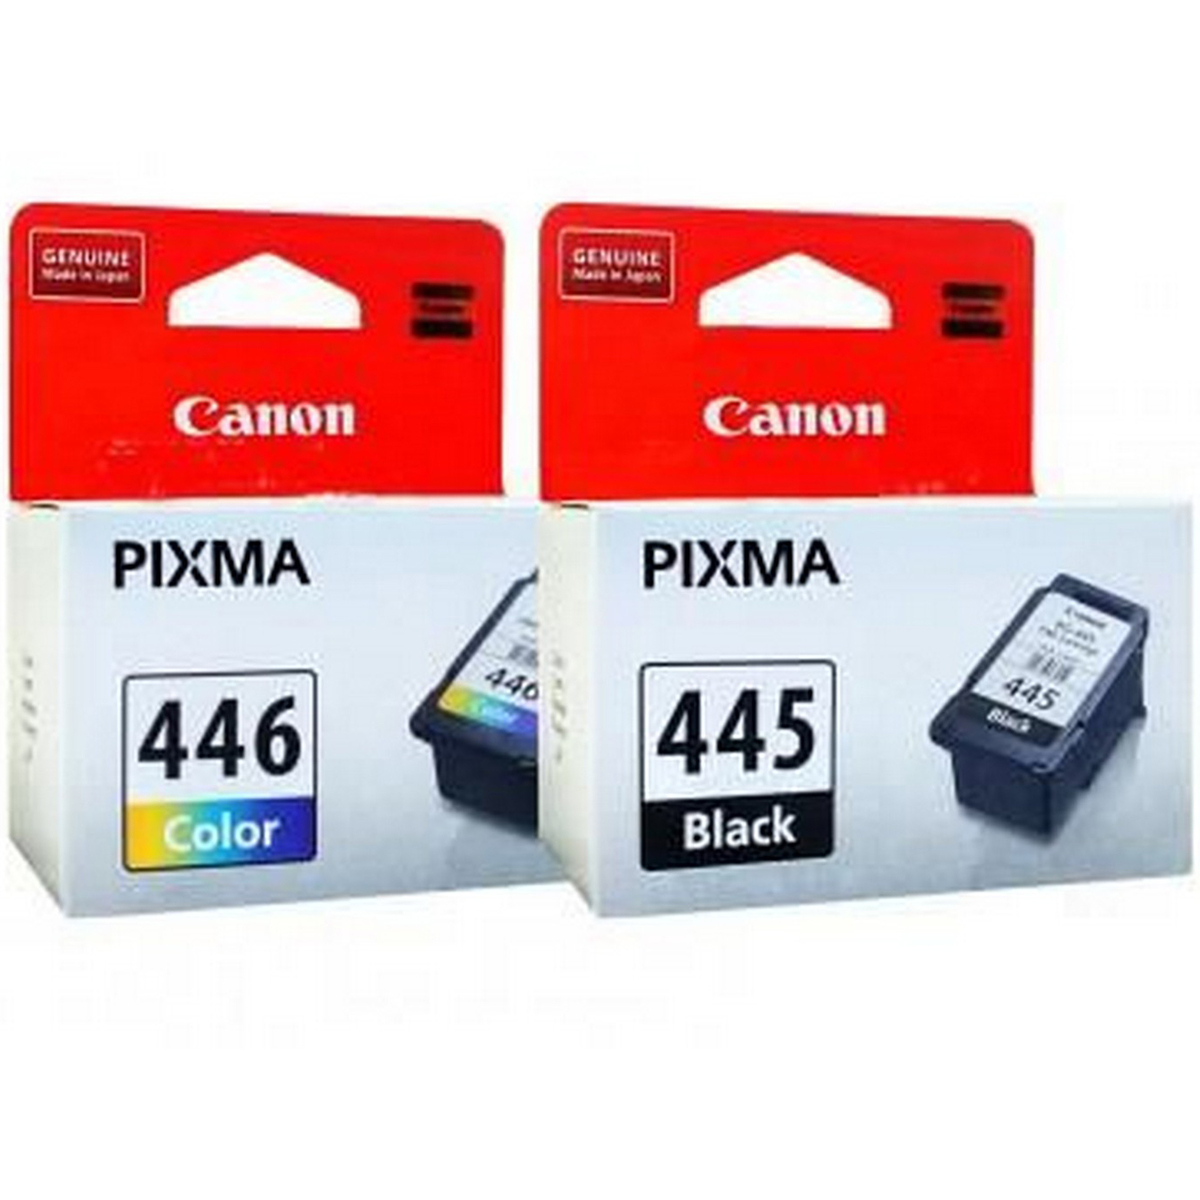 Canon pixma 445. Картриджи 445 446 для Canon. Canon PIXMA 445 картридж. Принтер Кэнон 446 картридж. Картридж Canon 445 Black.